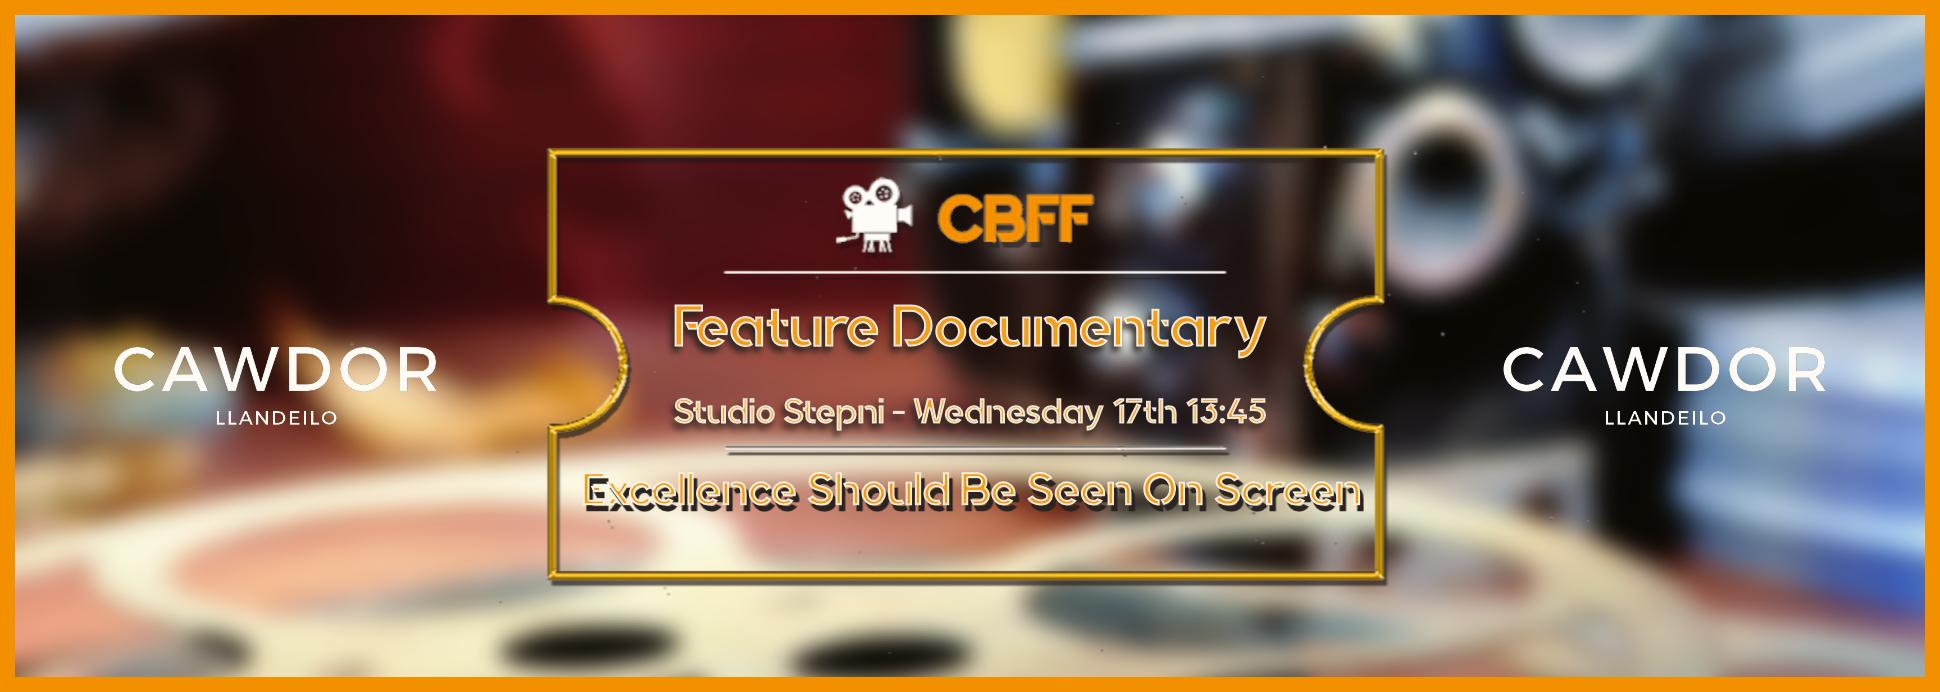 Studio Stepni - Feature Documentary 17th 13:45